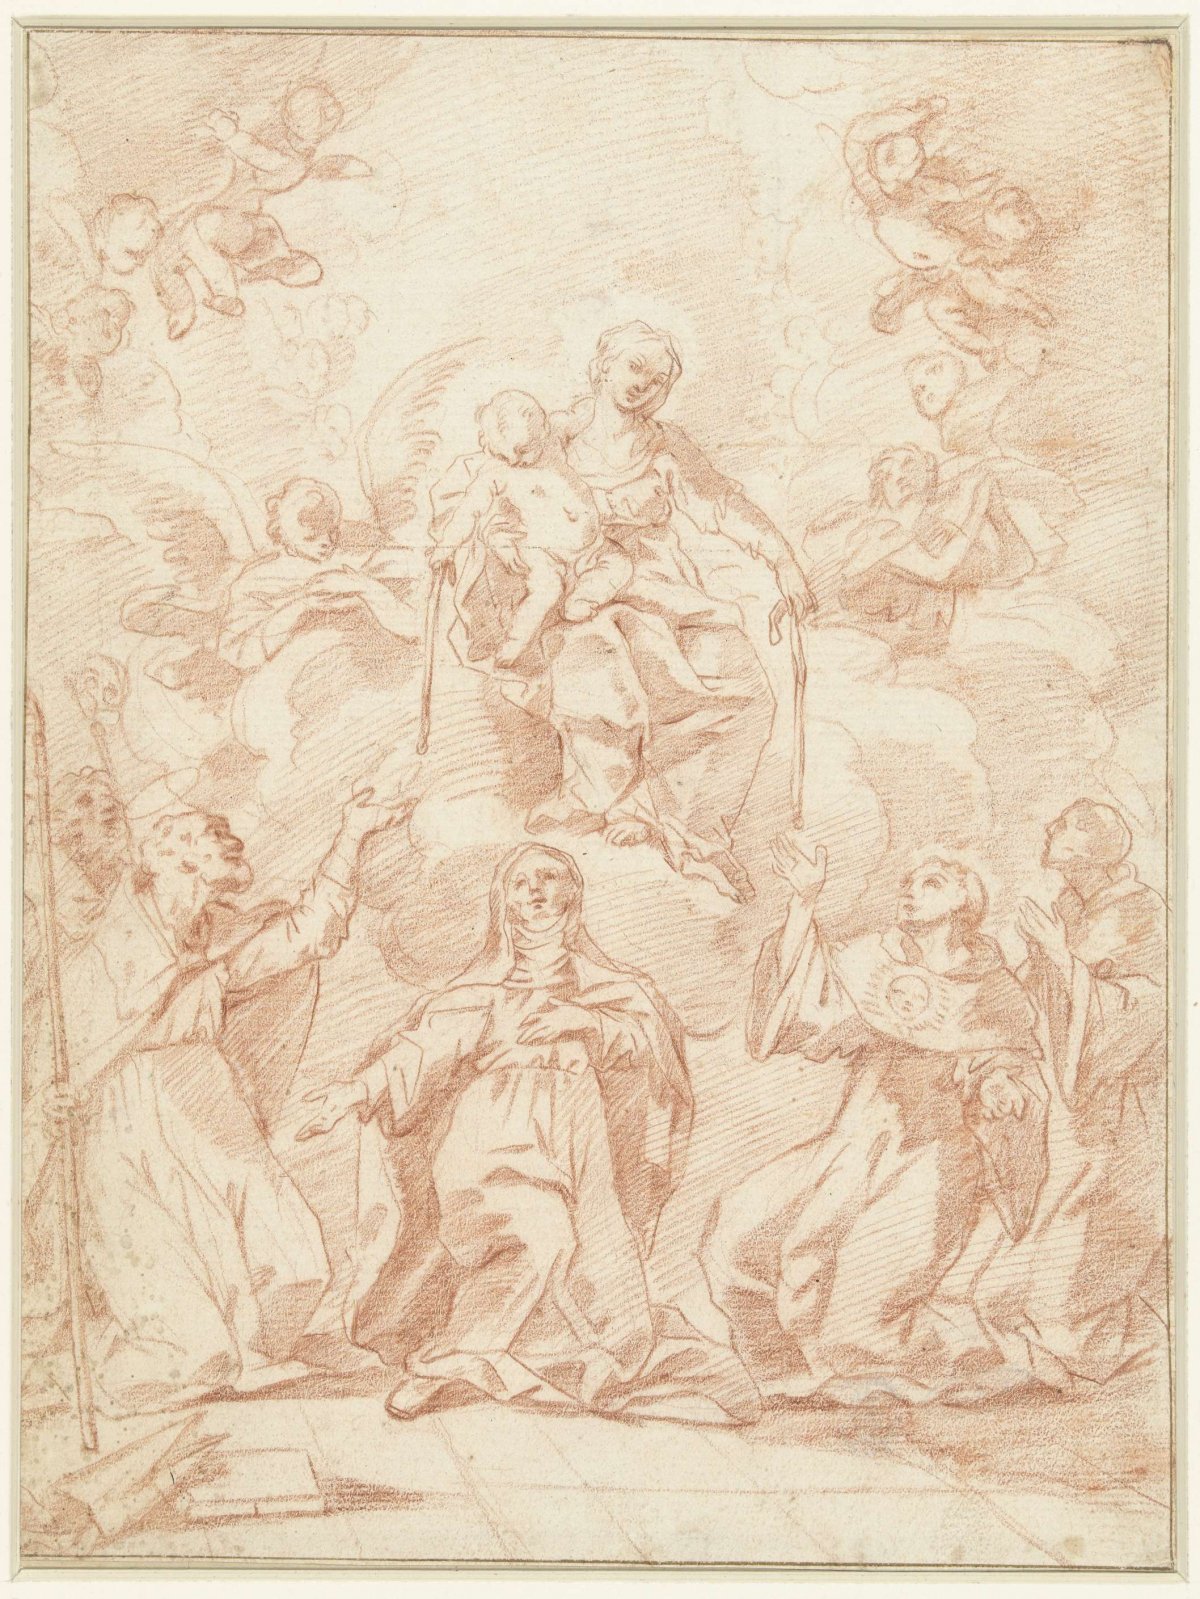 Madonna and child handing out scapulars, Francesco Vanni, 1573 - 1610